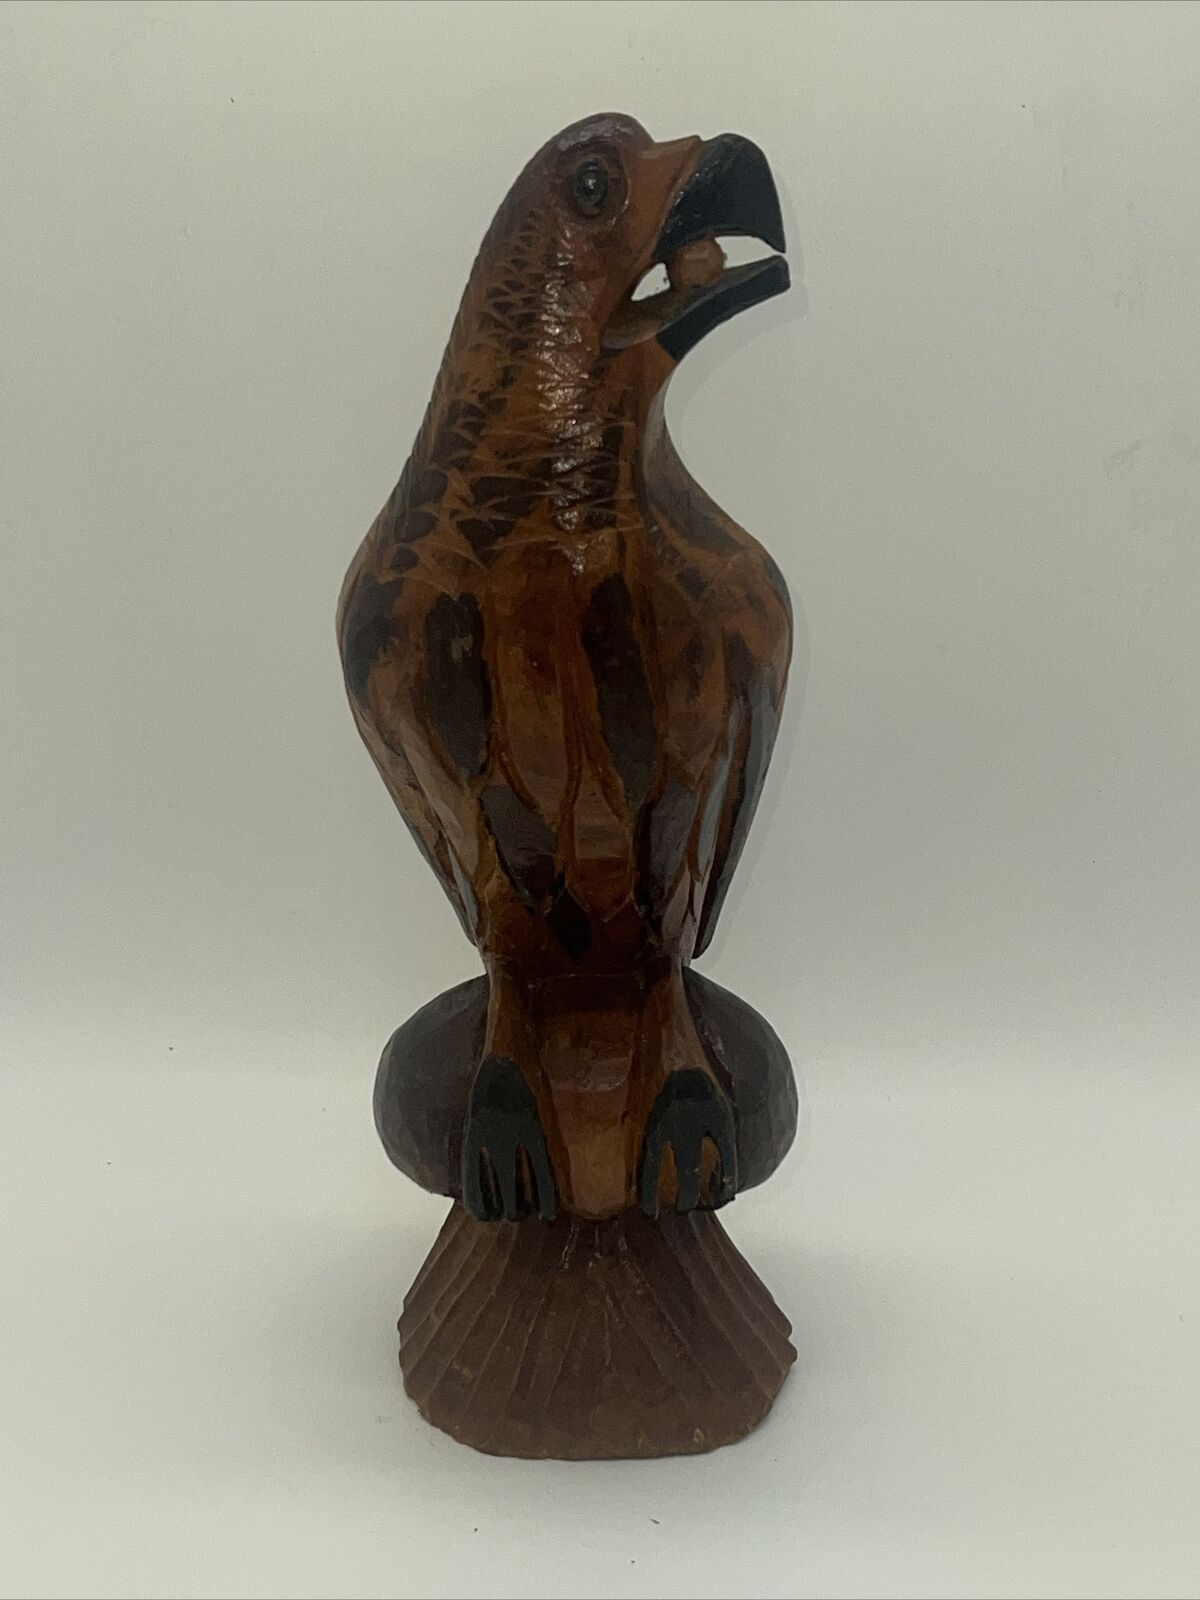 13” Tall Handcarved Detailed Wooden Perched Eagle Bird Of Prey Vintage Original